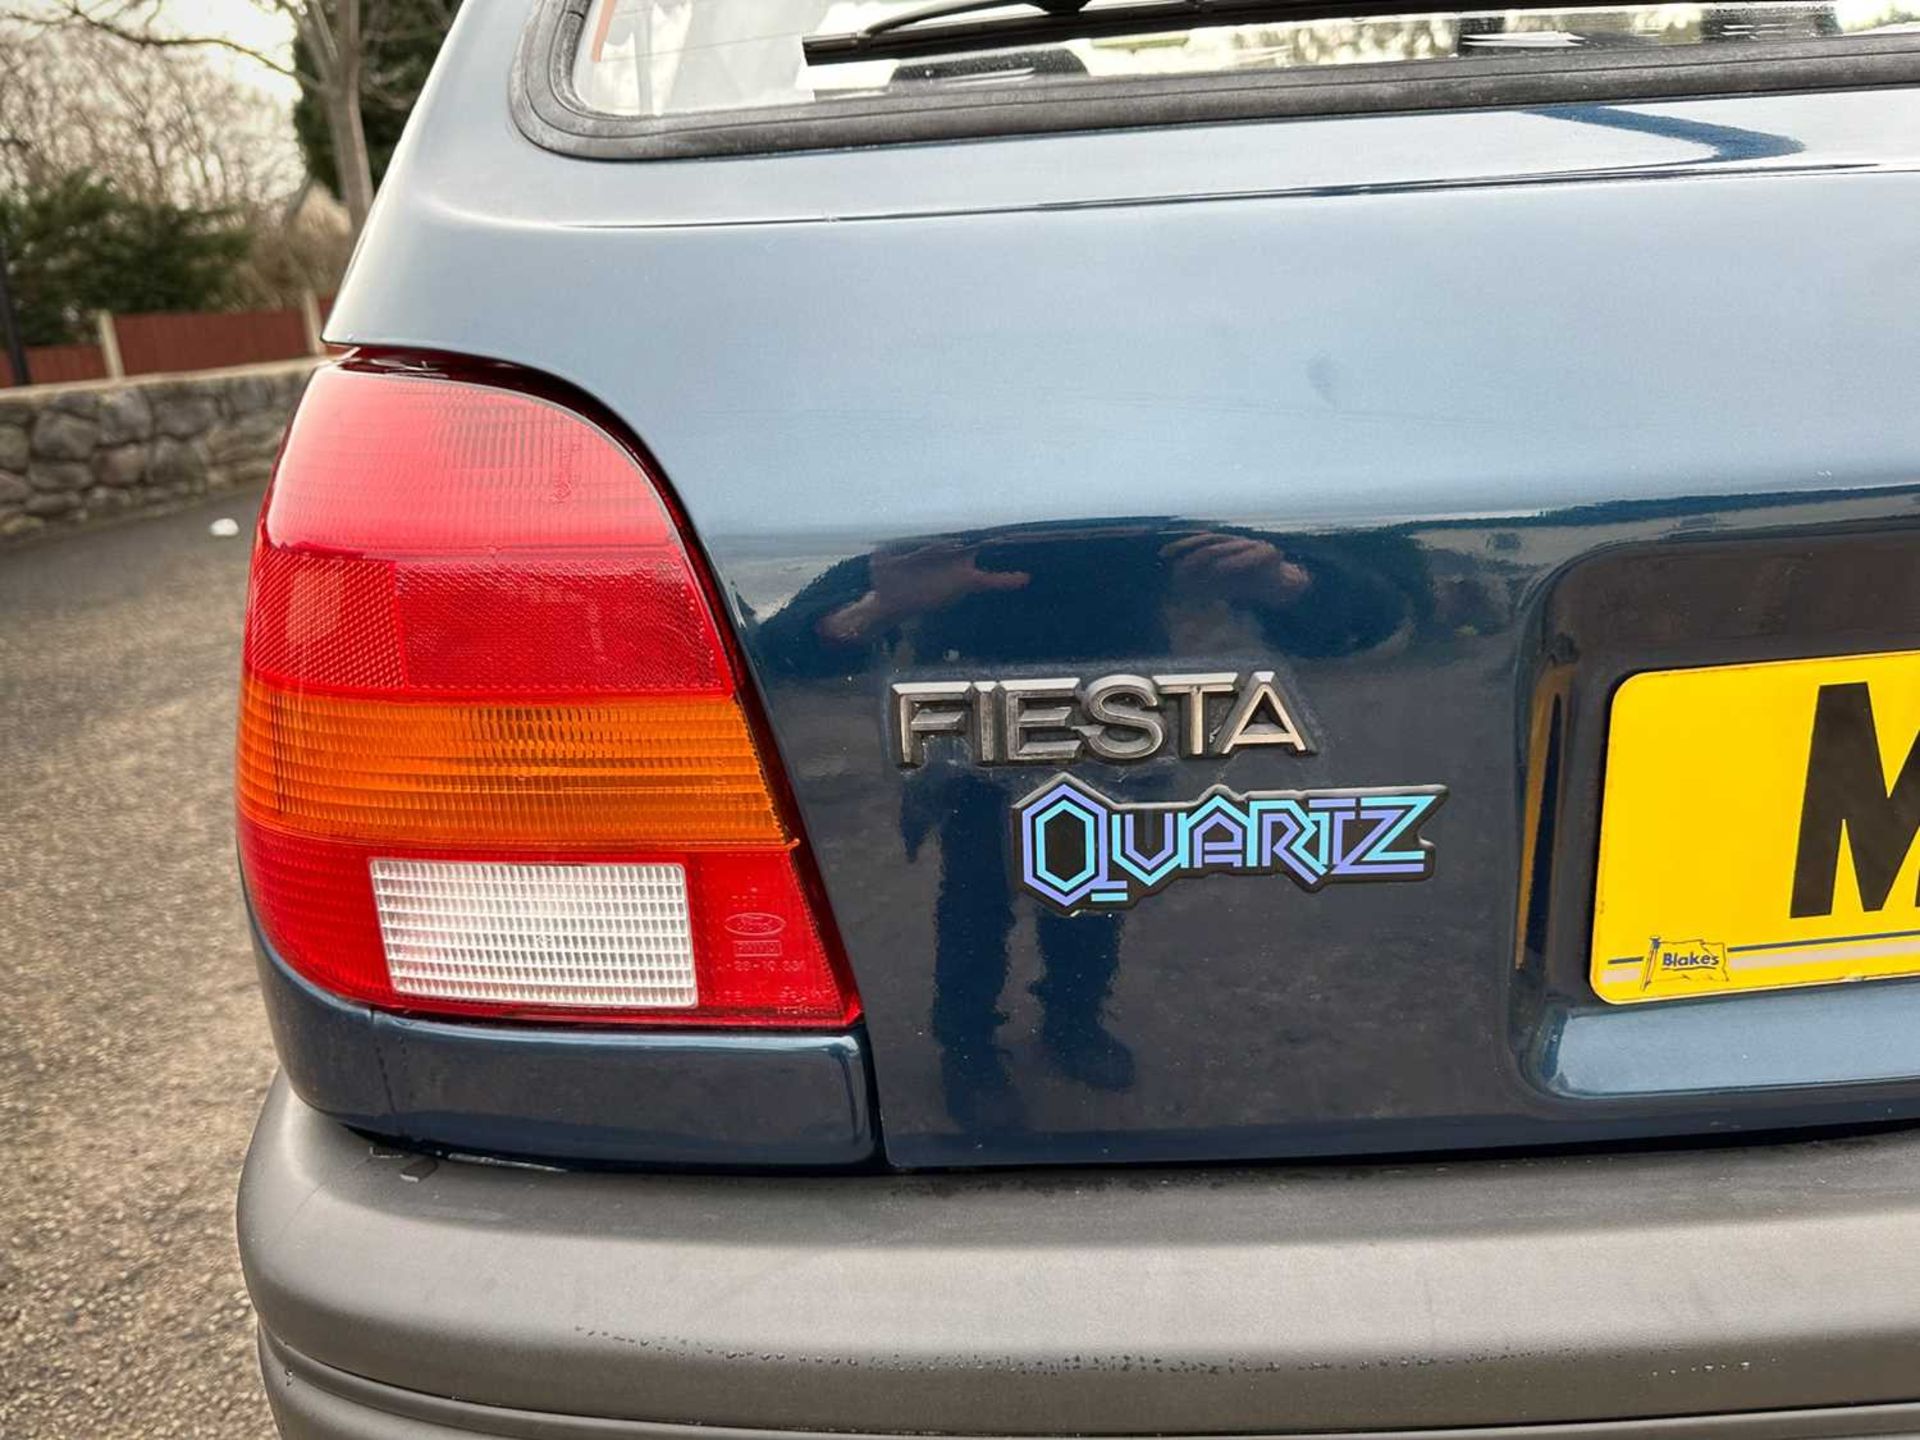 1995 Ford Fiesta Quartz *** NO RESERVE *** - Image 39 of 46